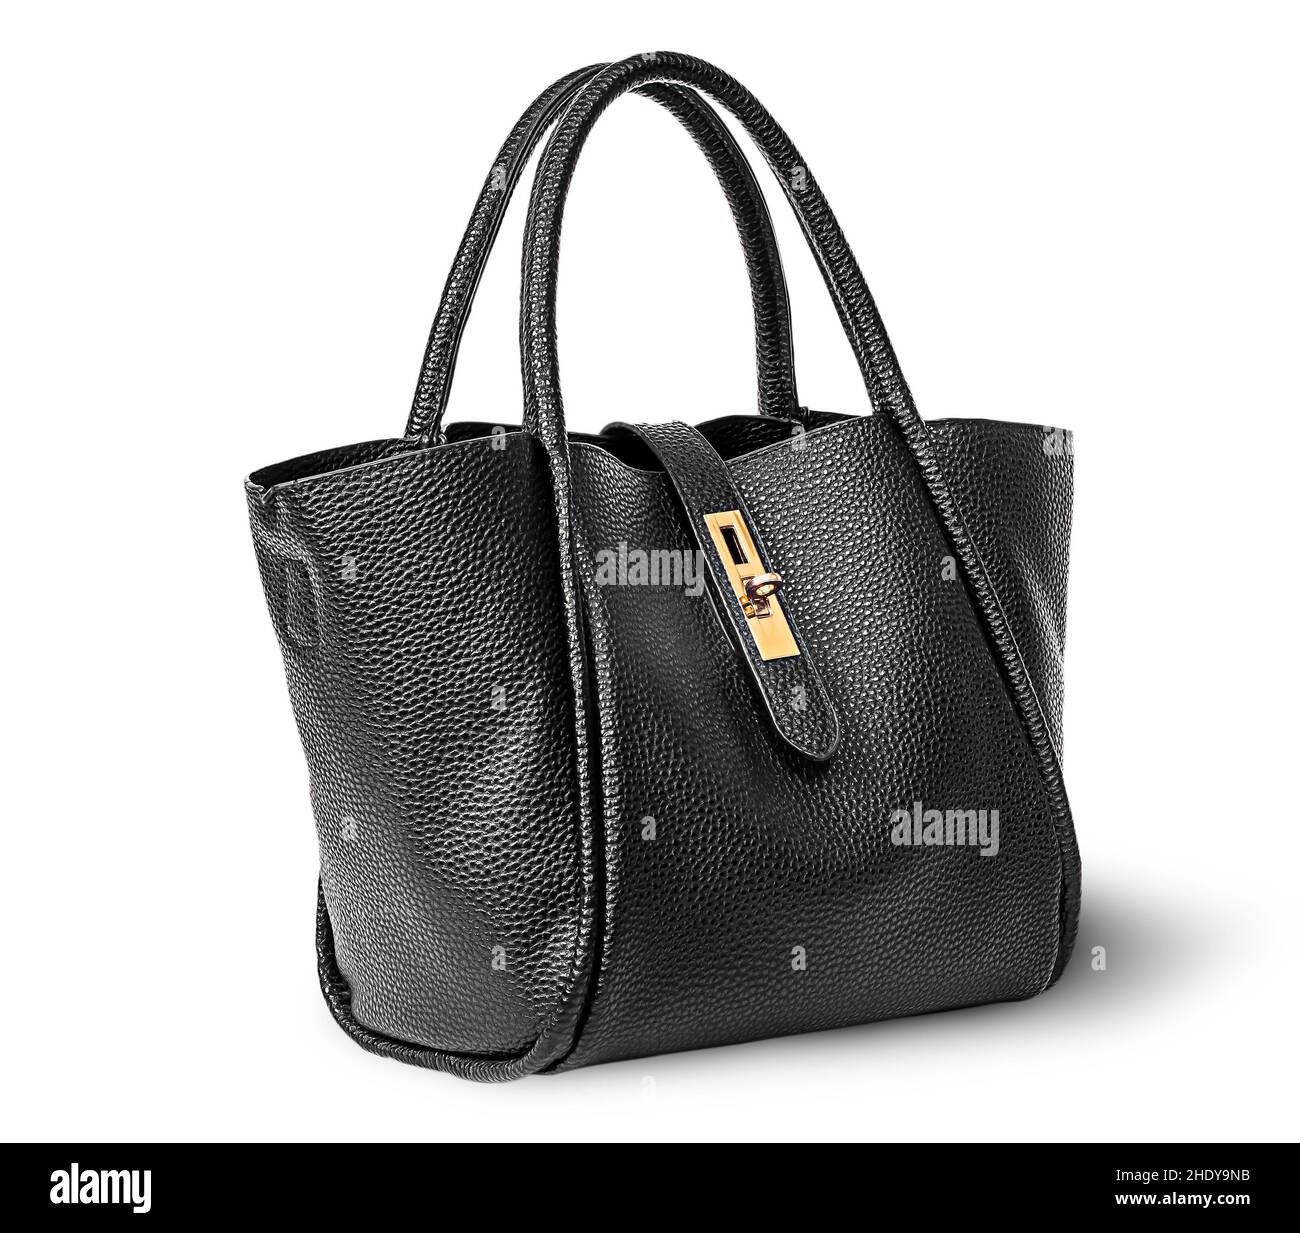 Designer handbag hi-res stock photography and images - Alamy